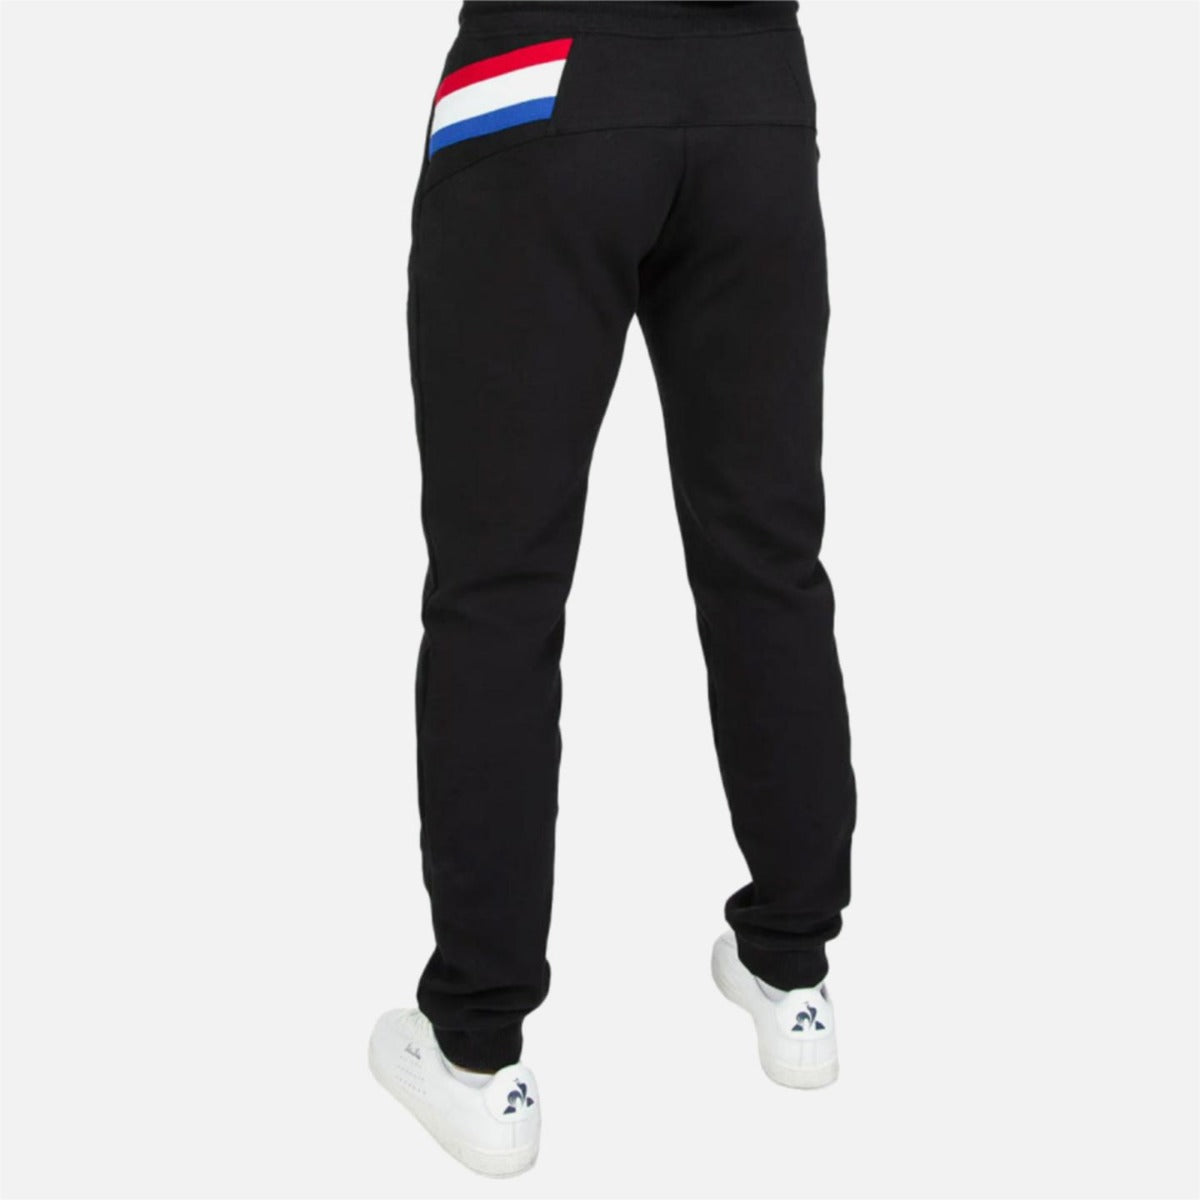 Pantaloni tricolore Le Coq Sportif - Neri 